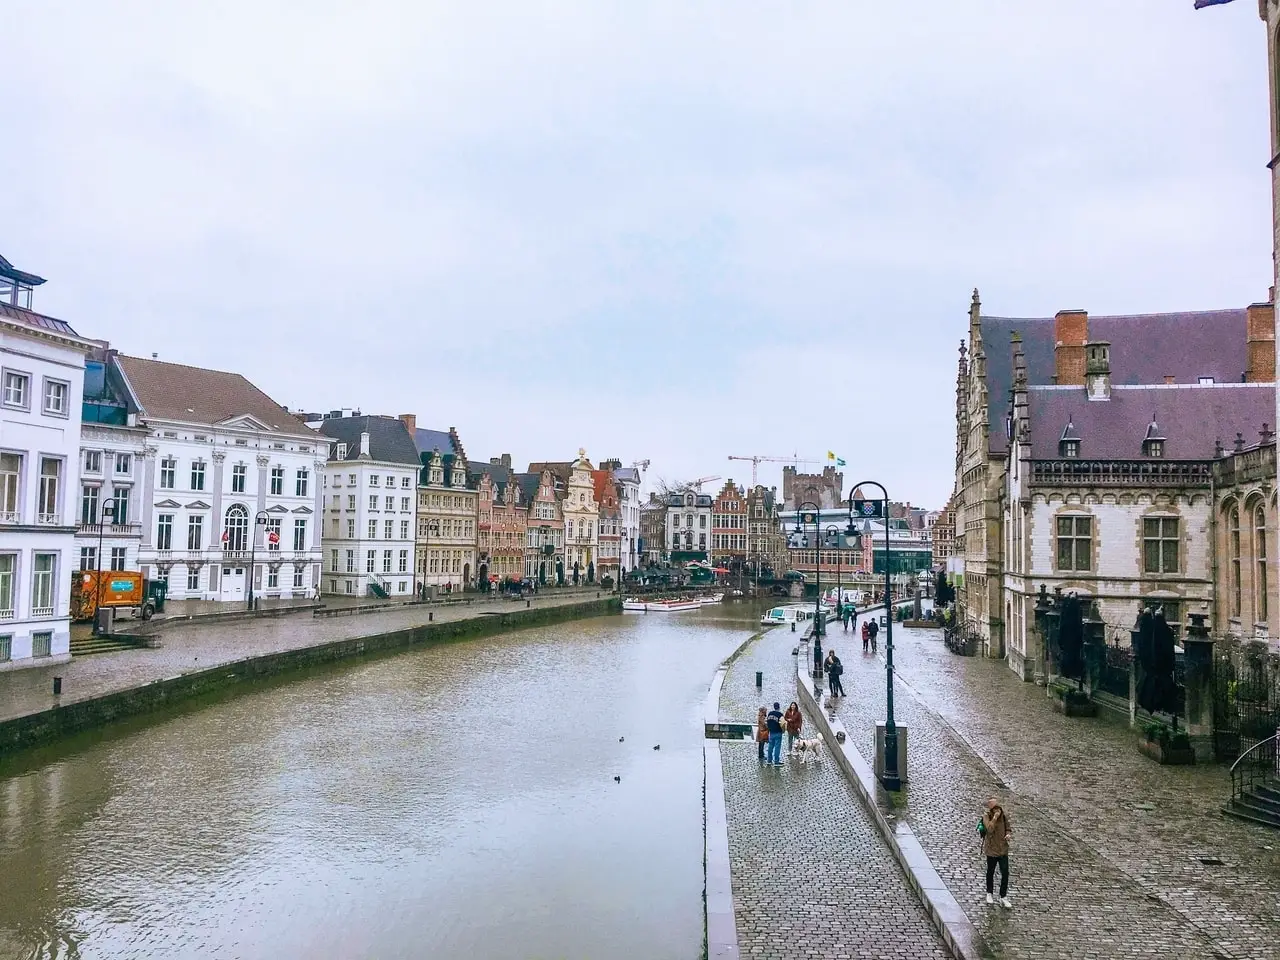 Walking along Graslei during one day in Ghent, Belgium